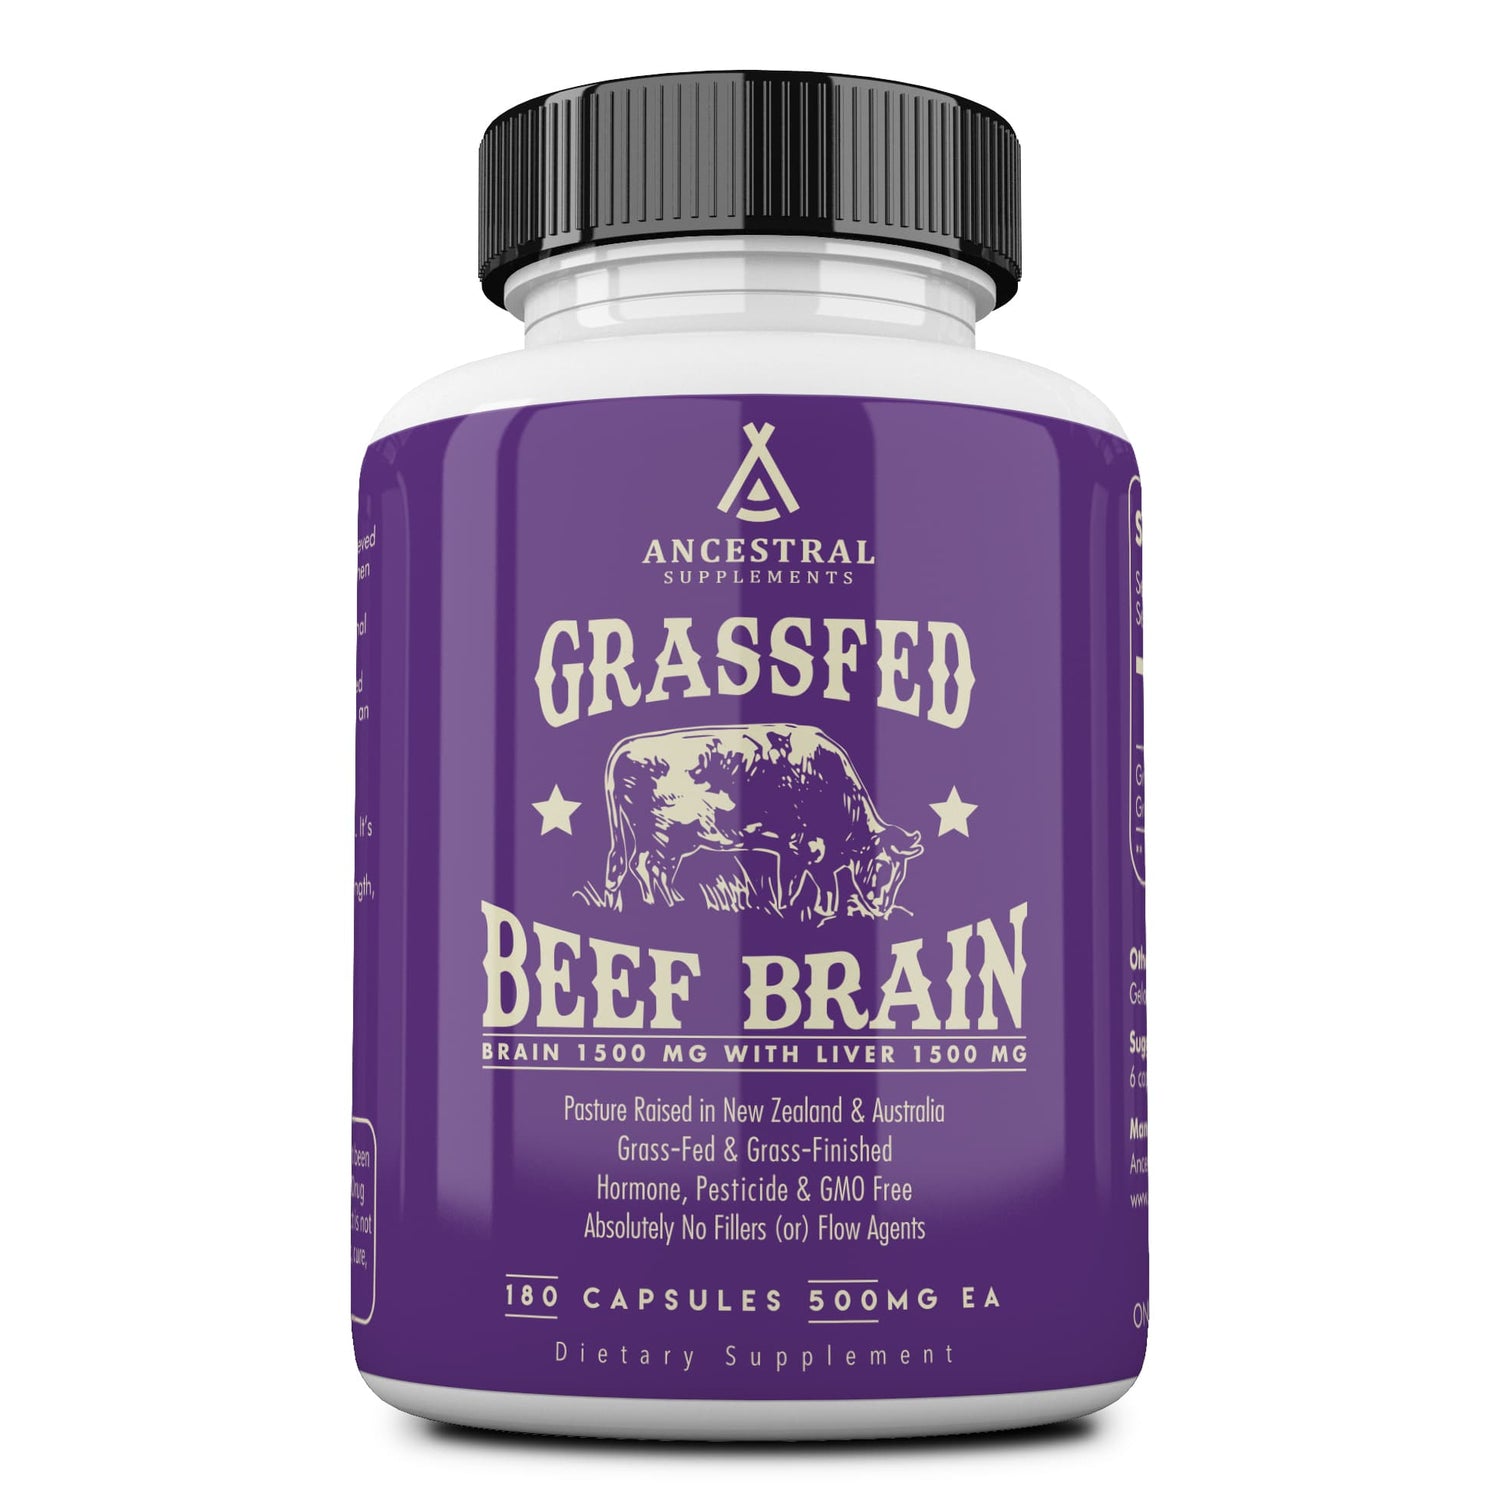 Ancestral Supplements- Ancestral Supplements Grassfed beef brain